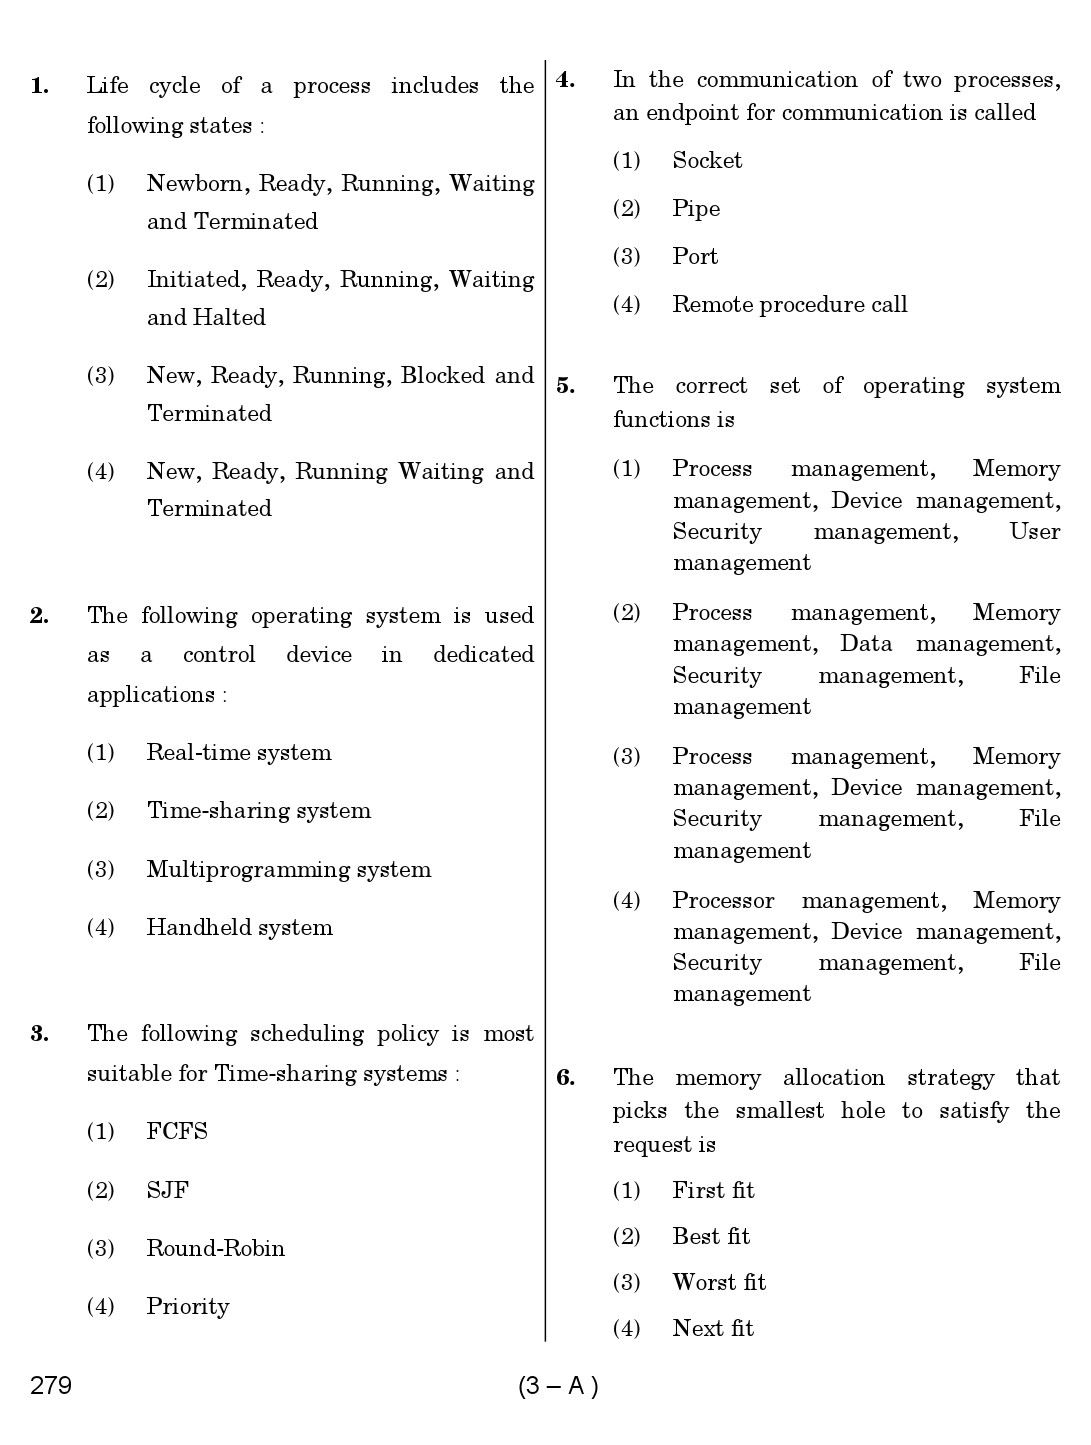 Karnataka PSC Computer Science Teachers Exam Sample Question Paper Subject code 279 3